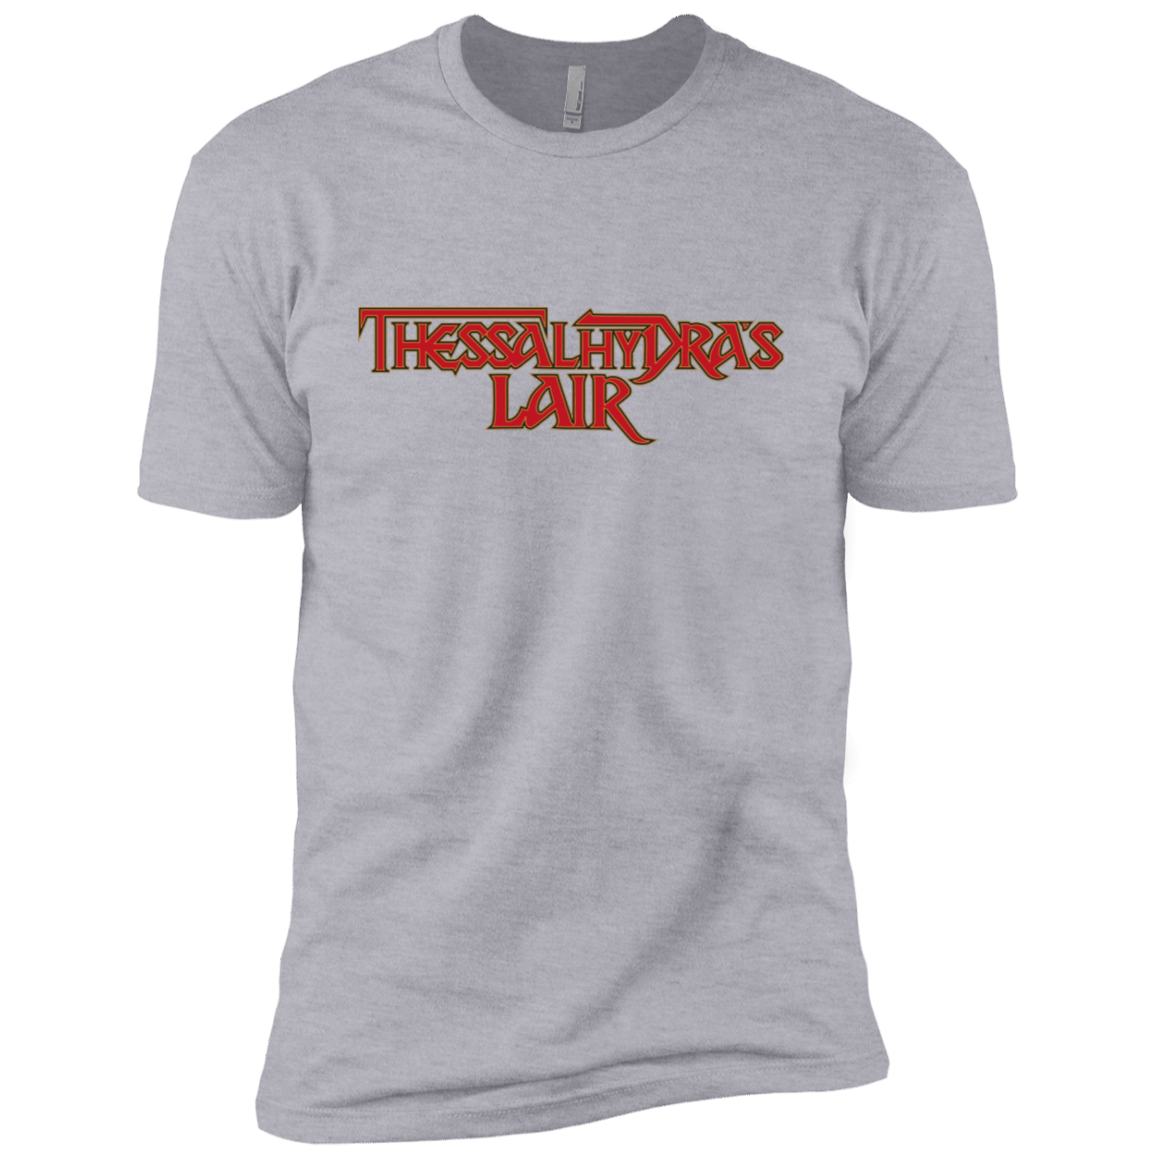 T-Shirts Heather Grey / X-Small Thessalhydras Lair Men's Premium T-Shirt